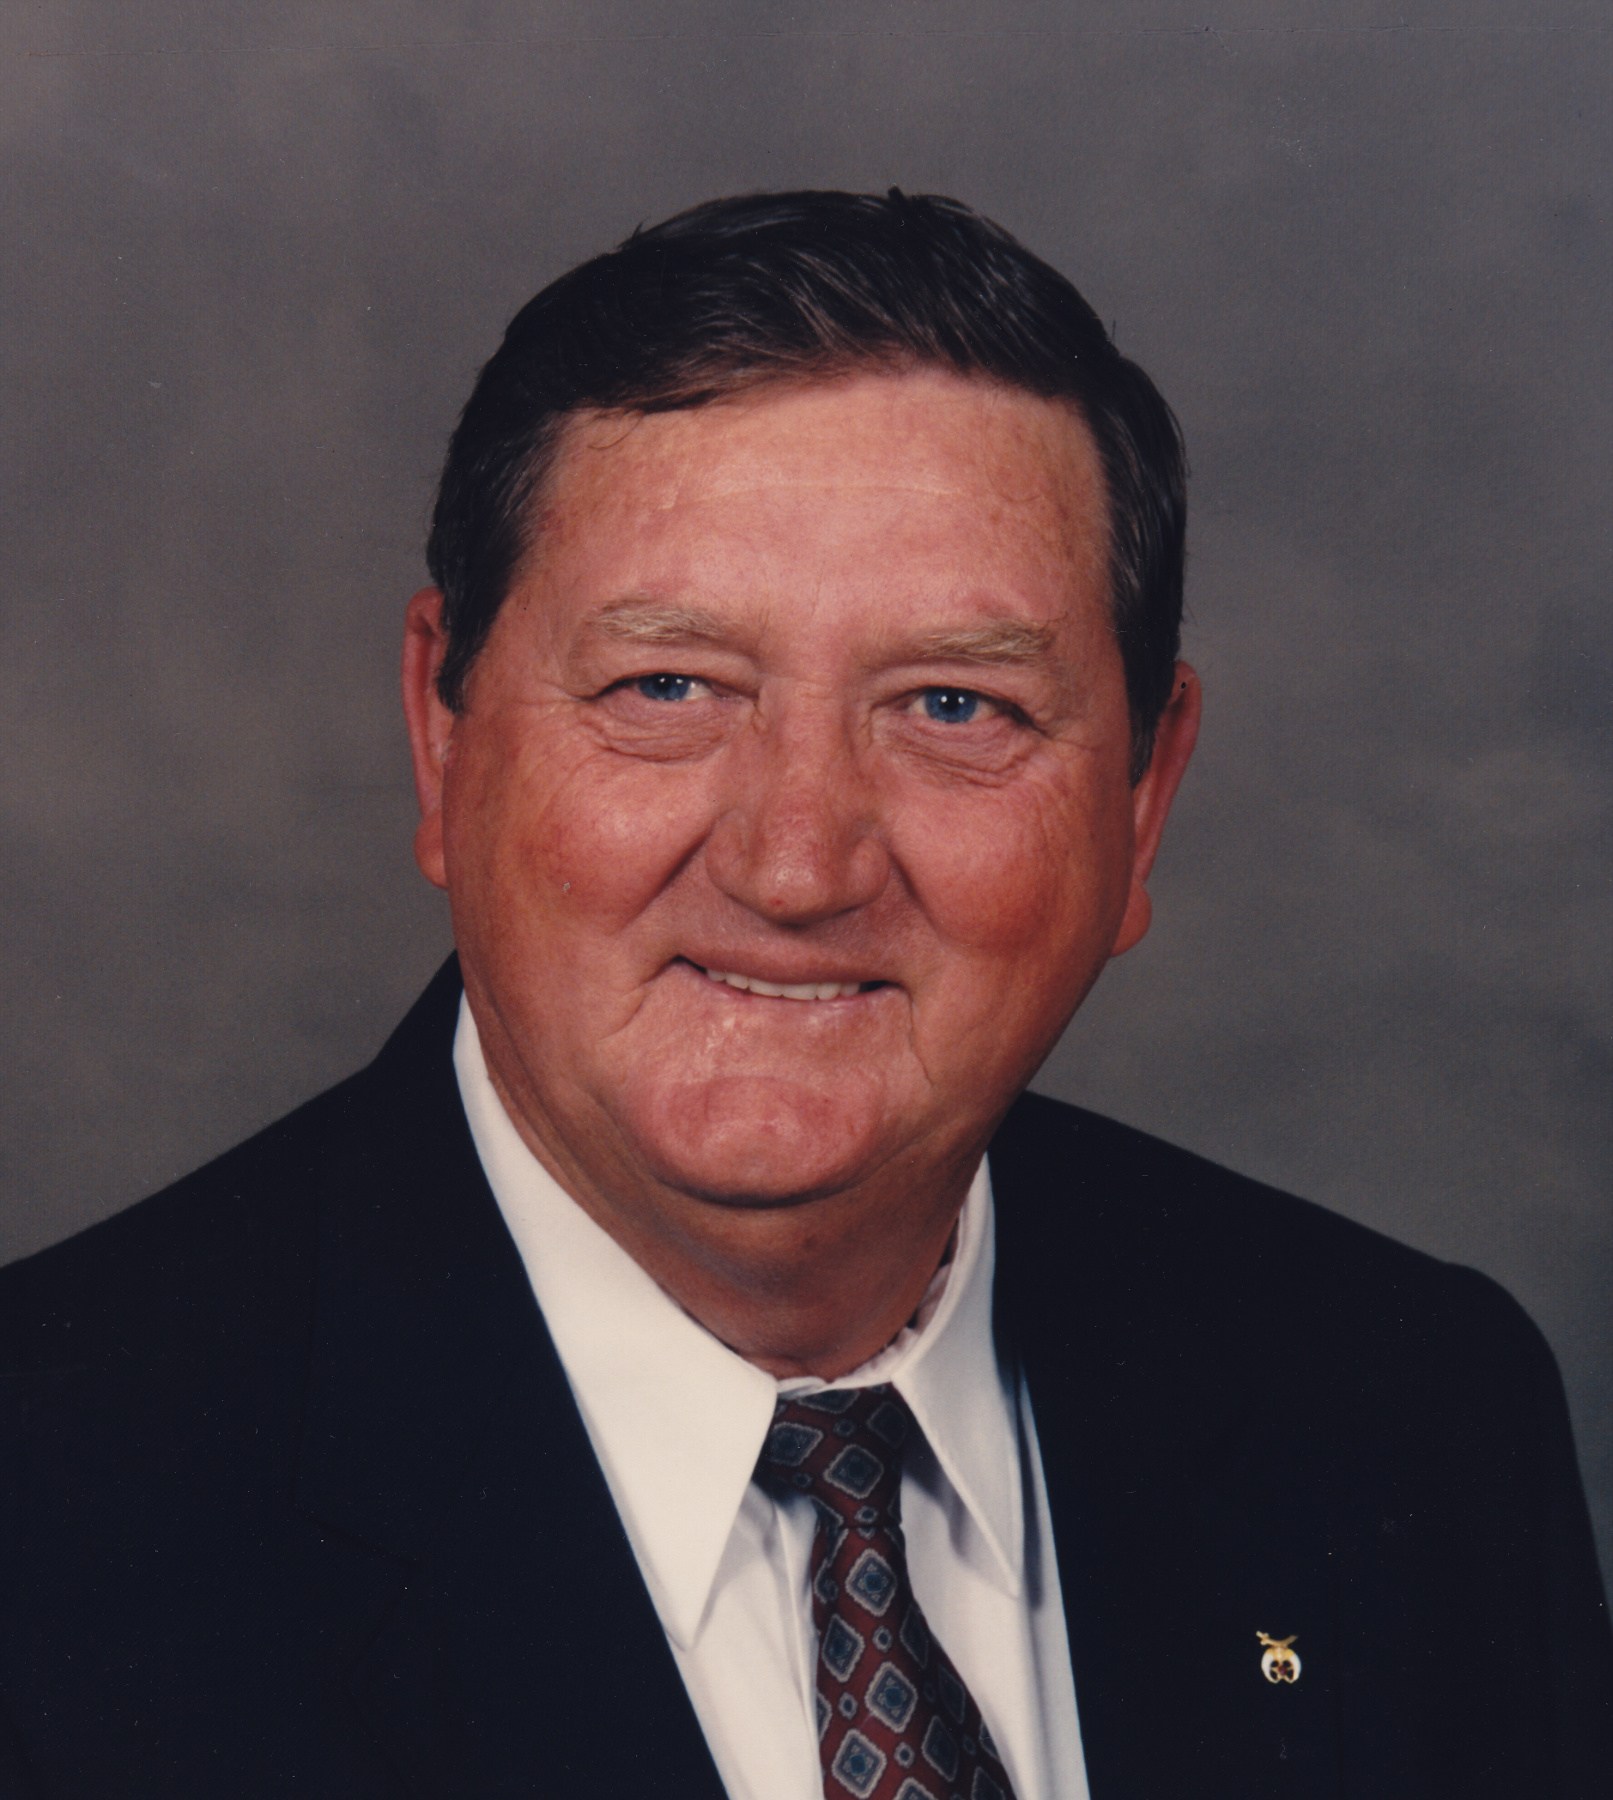 Robert Hendrick Obituary